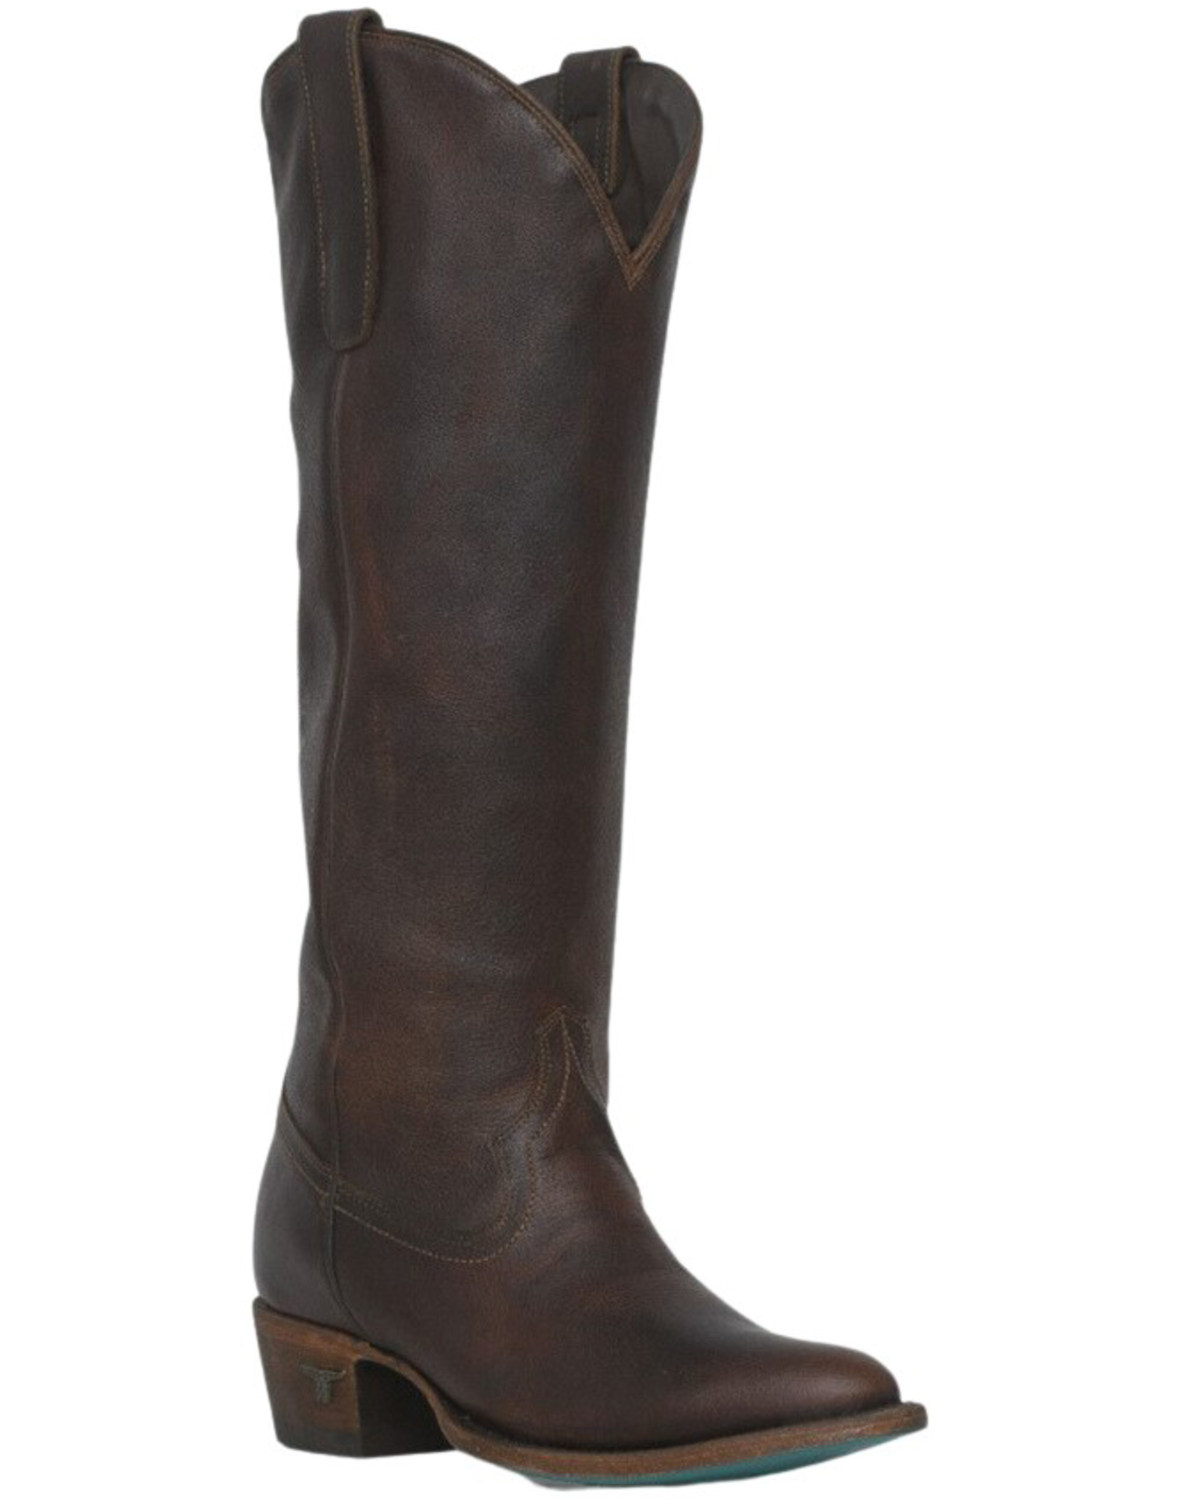 Lane Women's Plain Jane Tall Western Boots - Medium Toe